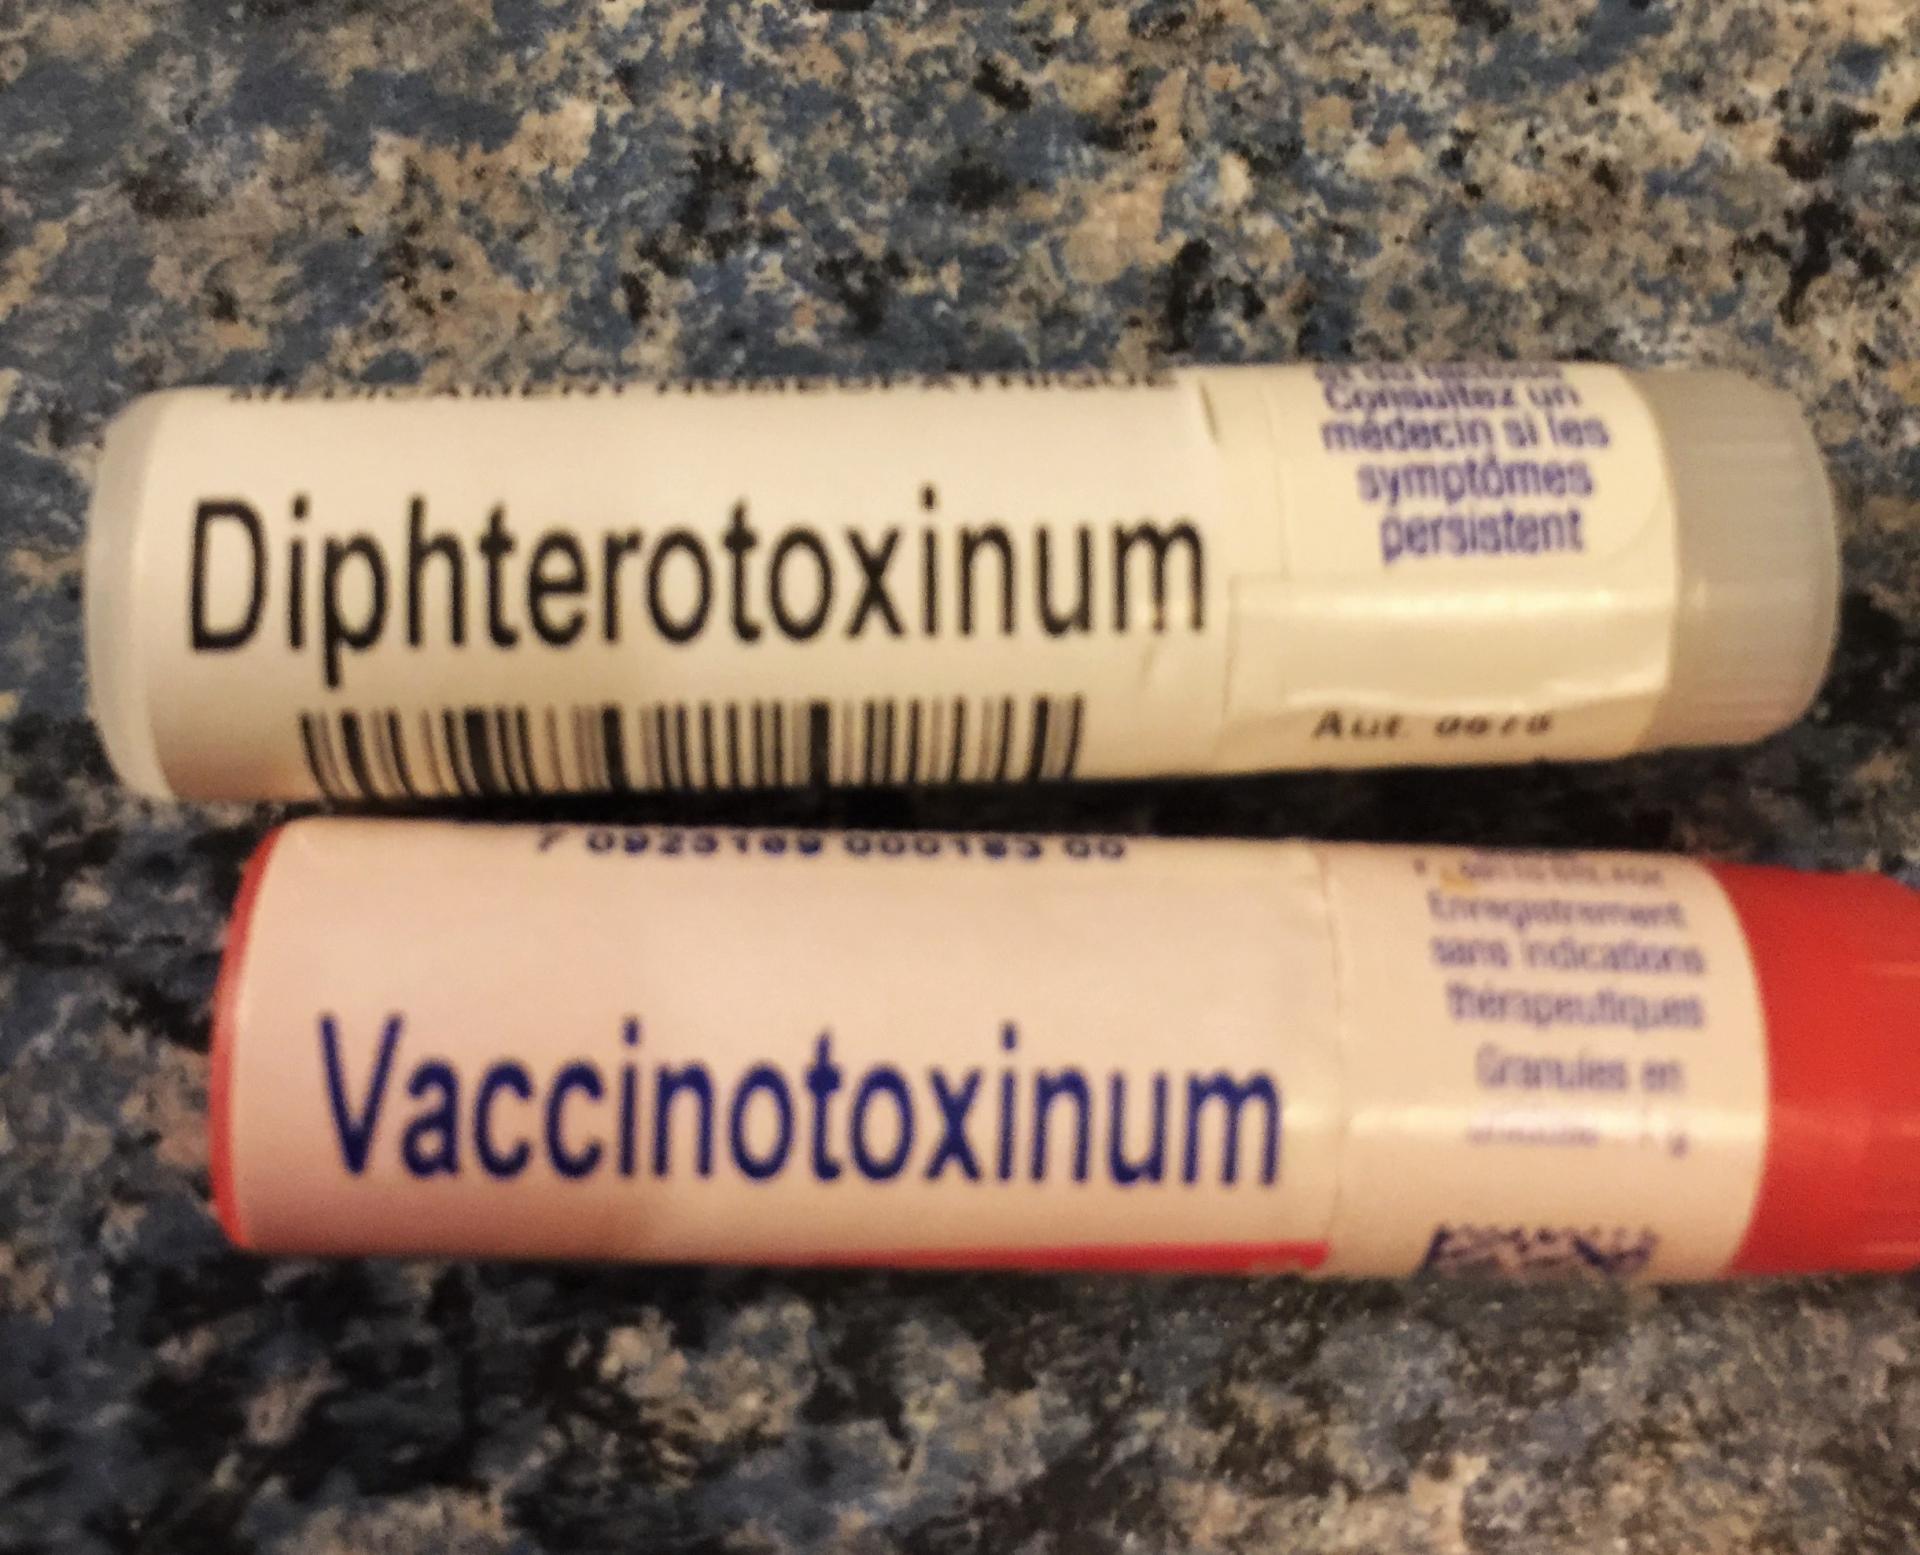 Diphterotoxinum vaccinotoxinum